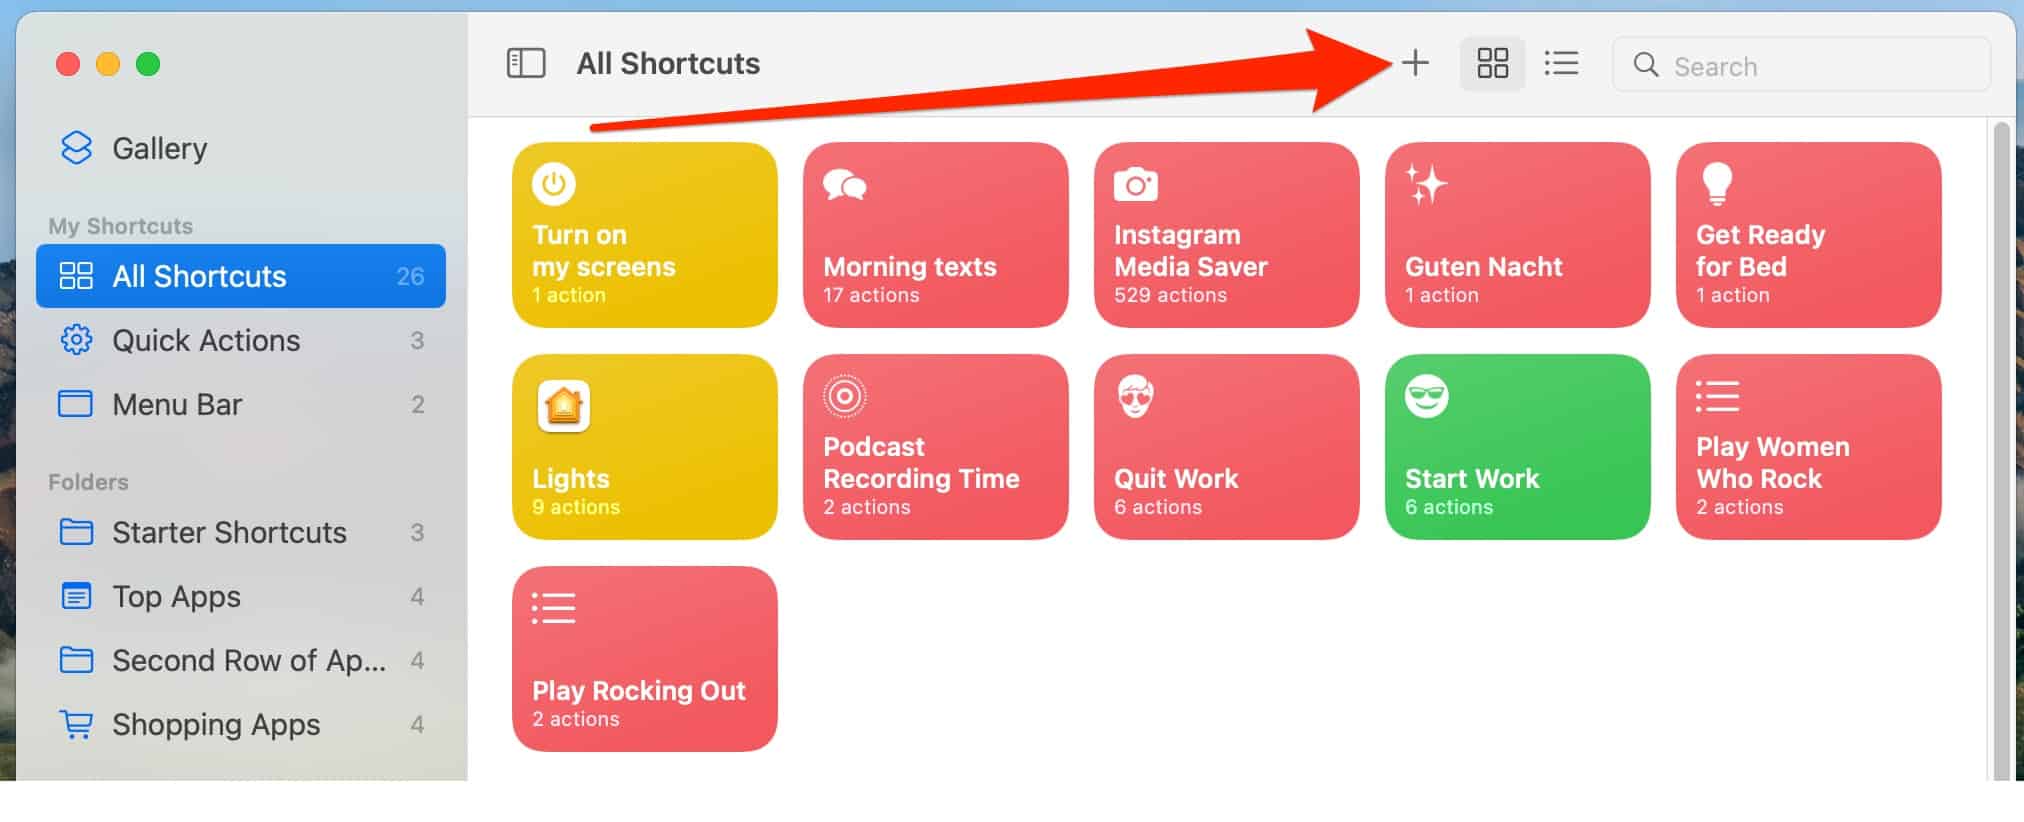 Creating a new shortcut